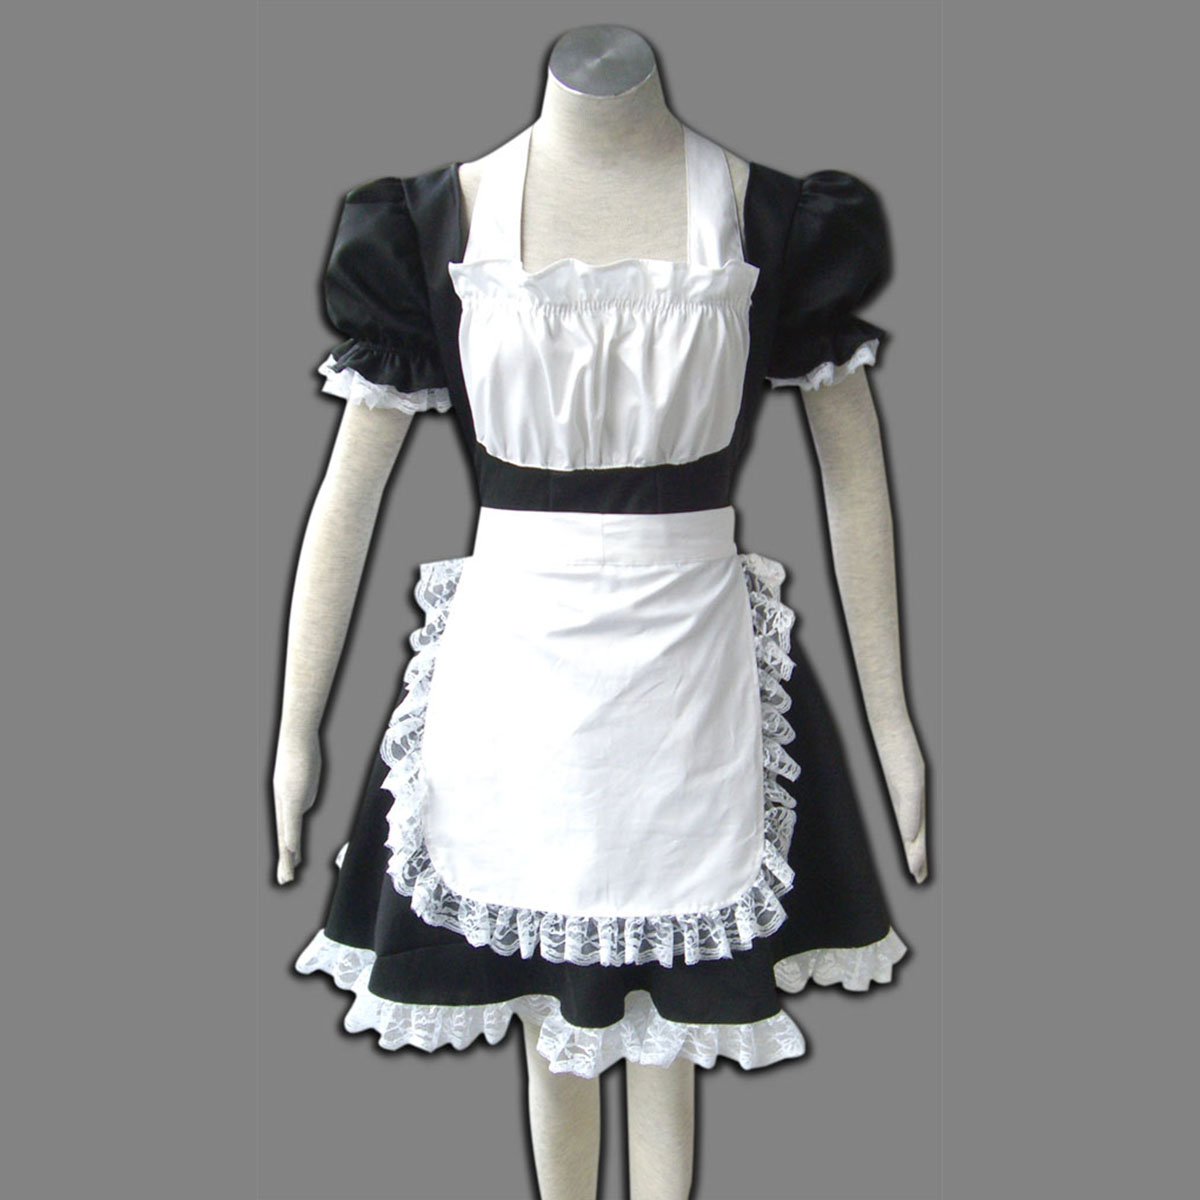 Maid Uniform 2 Svart Winged Angle Cosplay Kostym Sverige